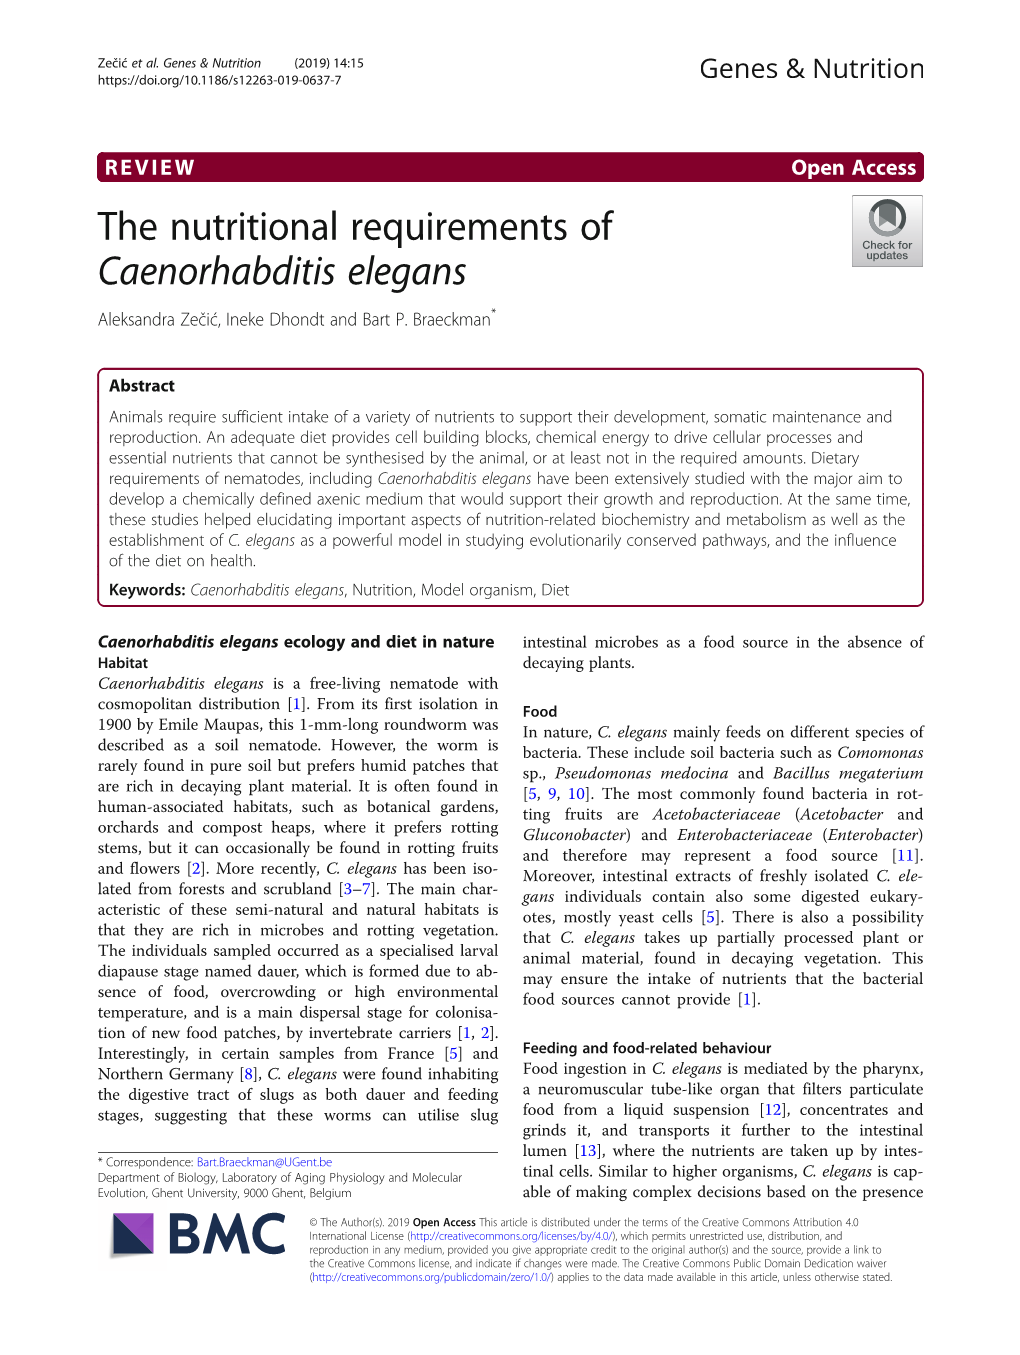 The Nutritional Requirements of Caenorhabditis Elegans Aleksandra Zečić, Ineke Dhondt and Bart P